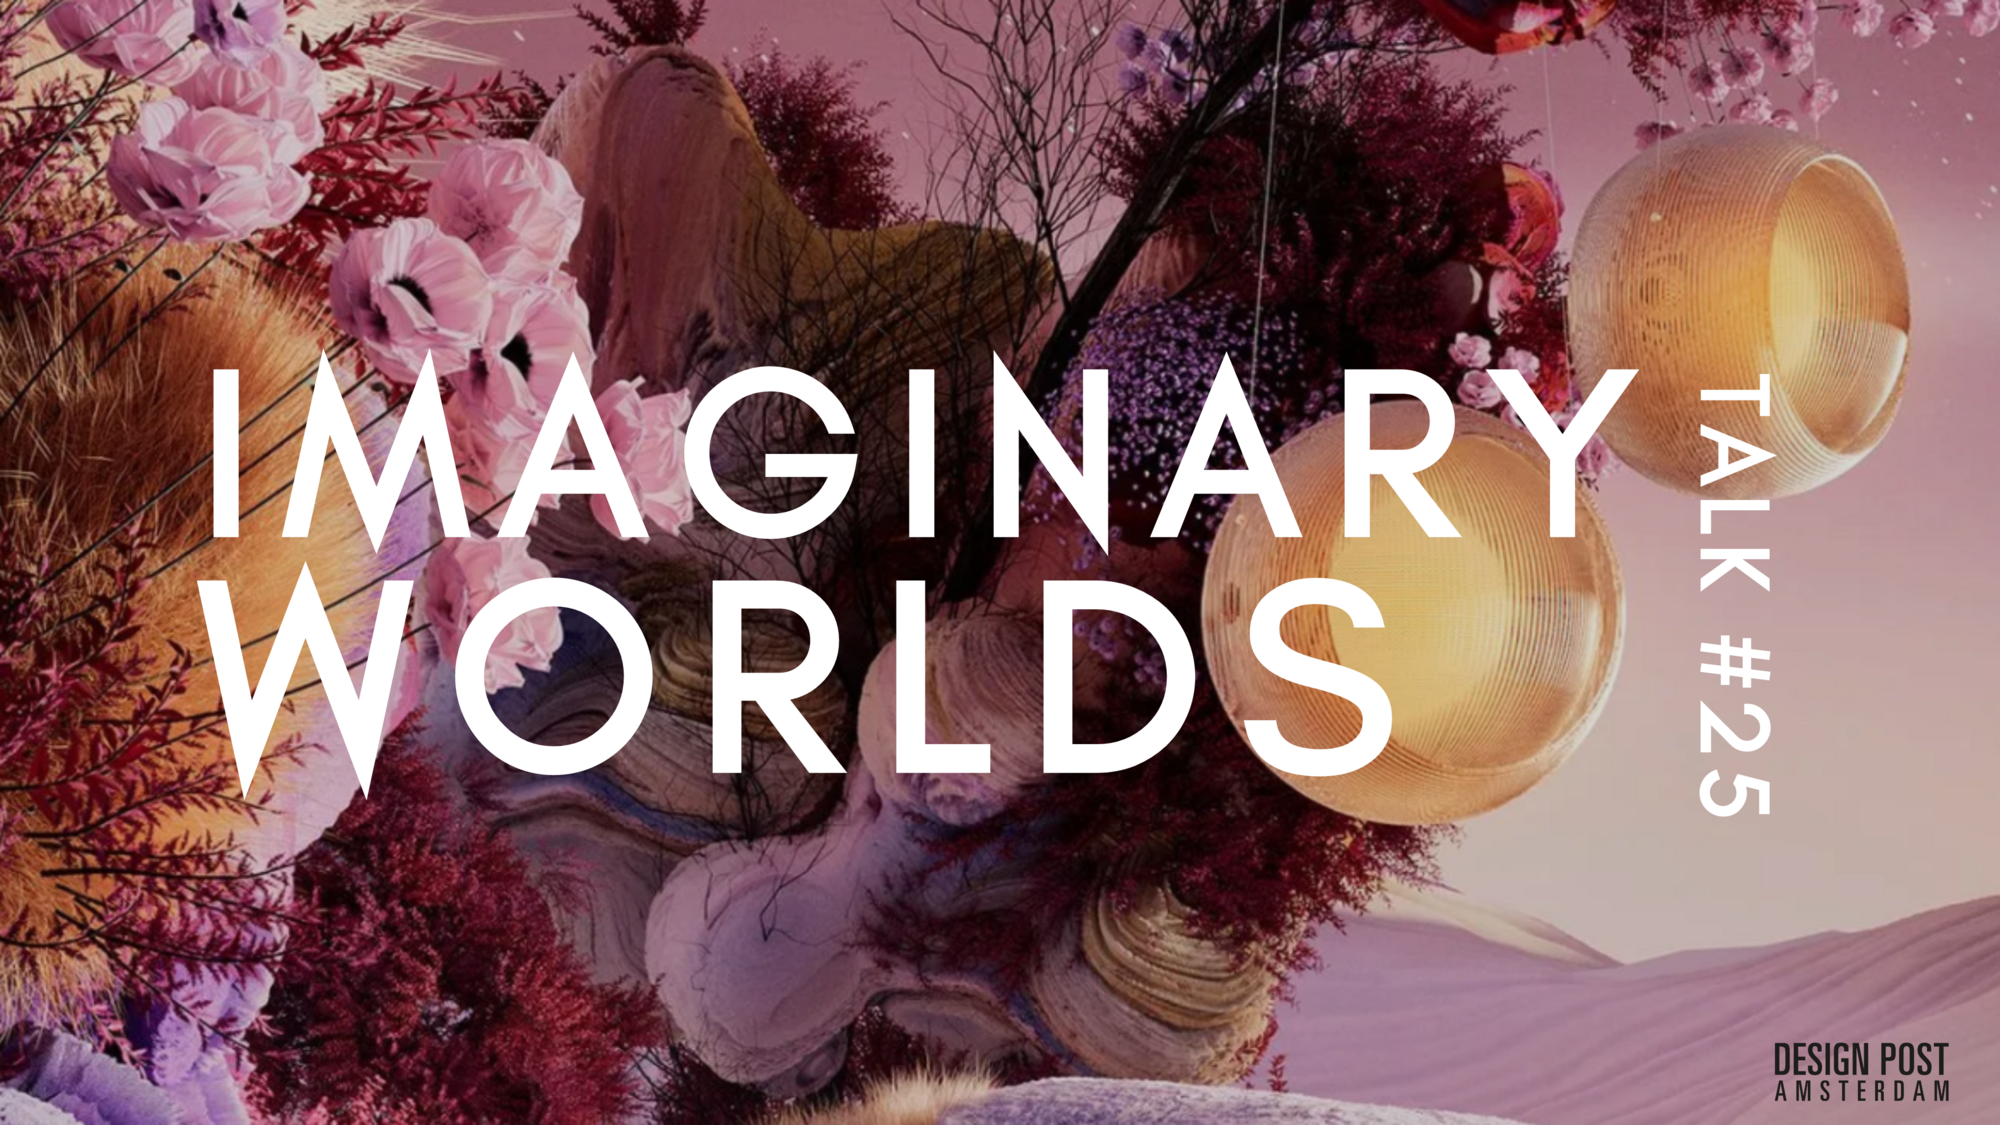 Design Post Amsterdam talk: Imaginary Worlds